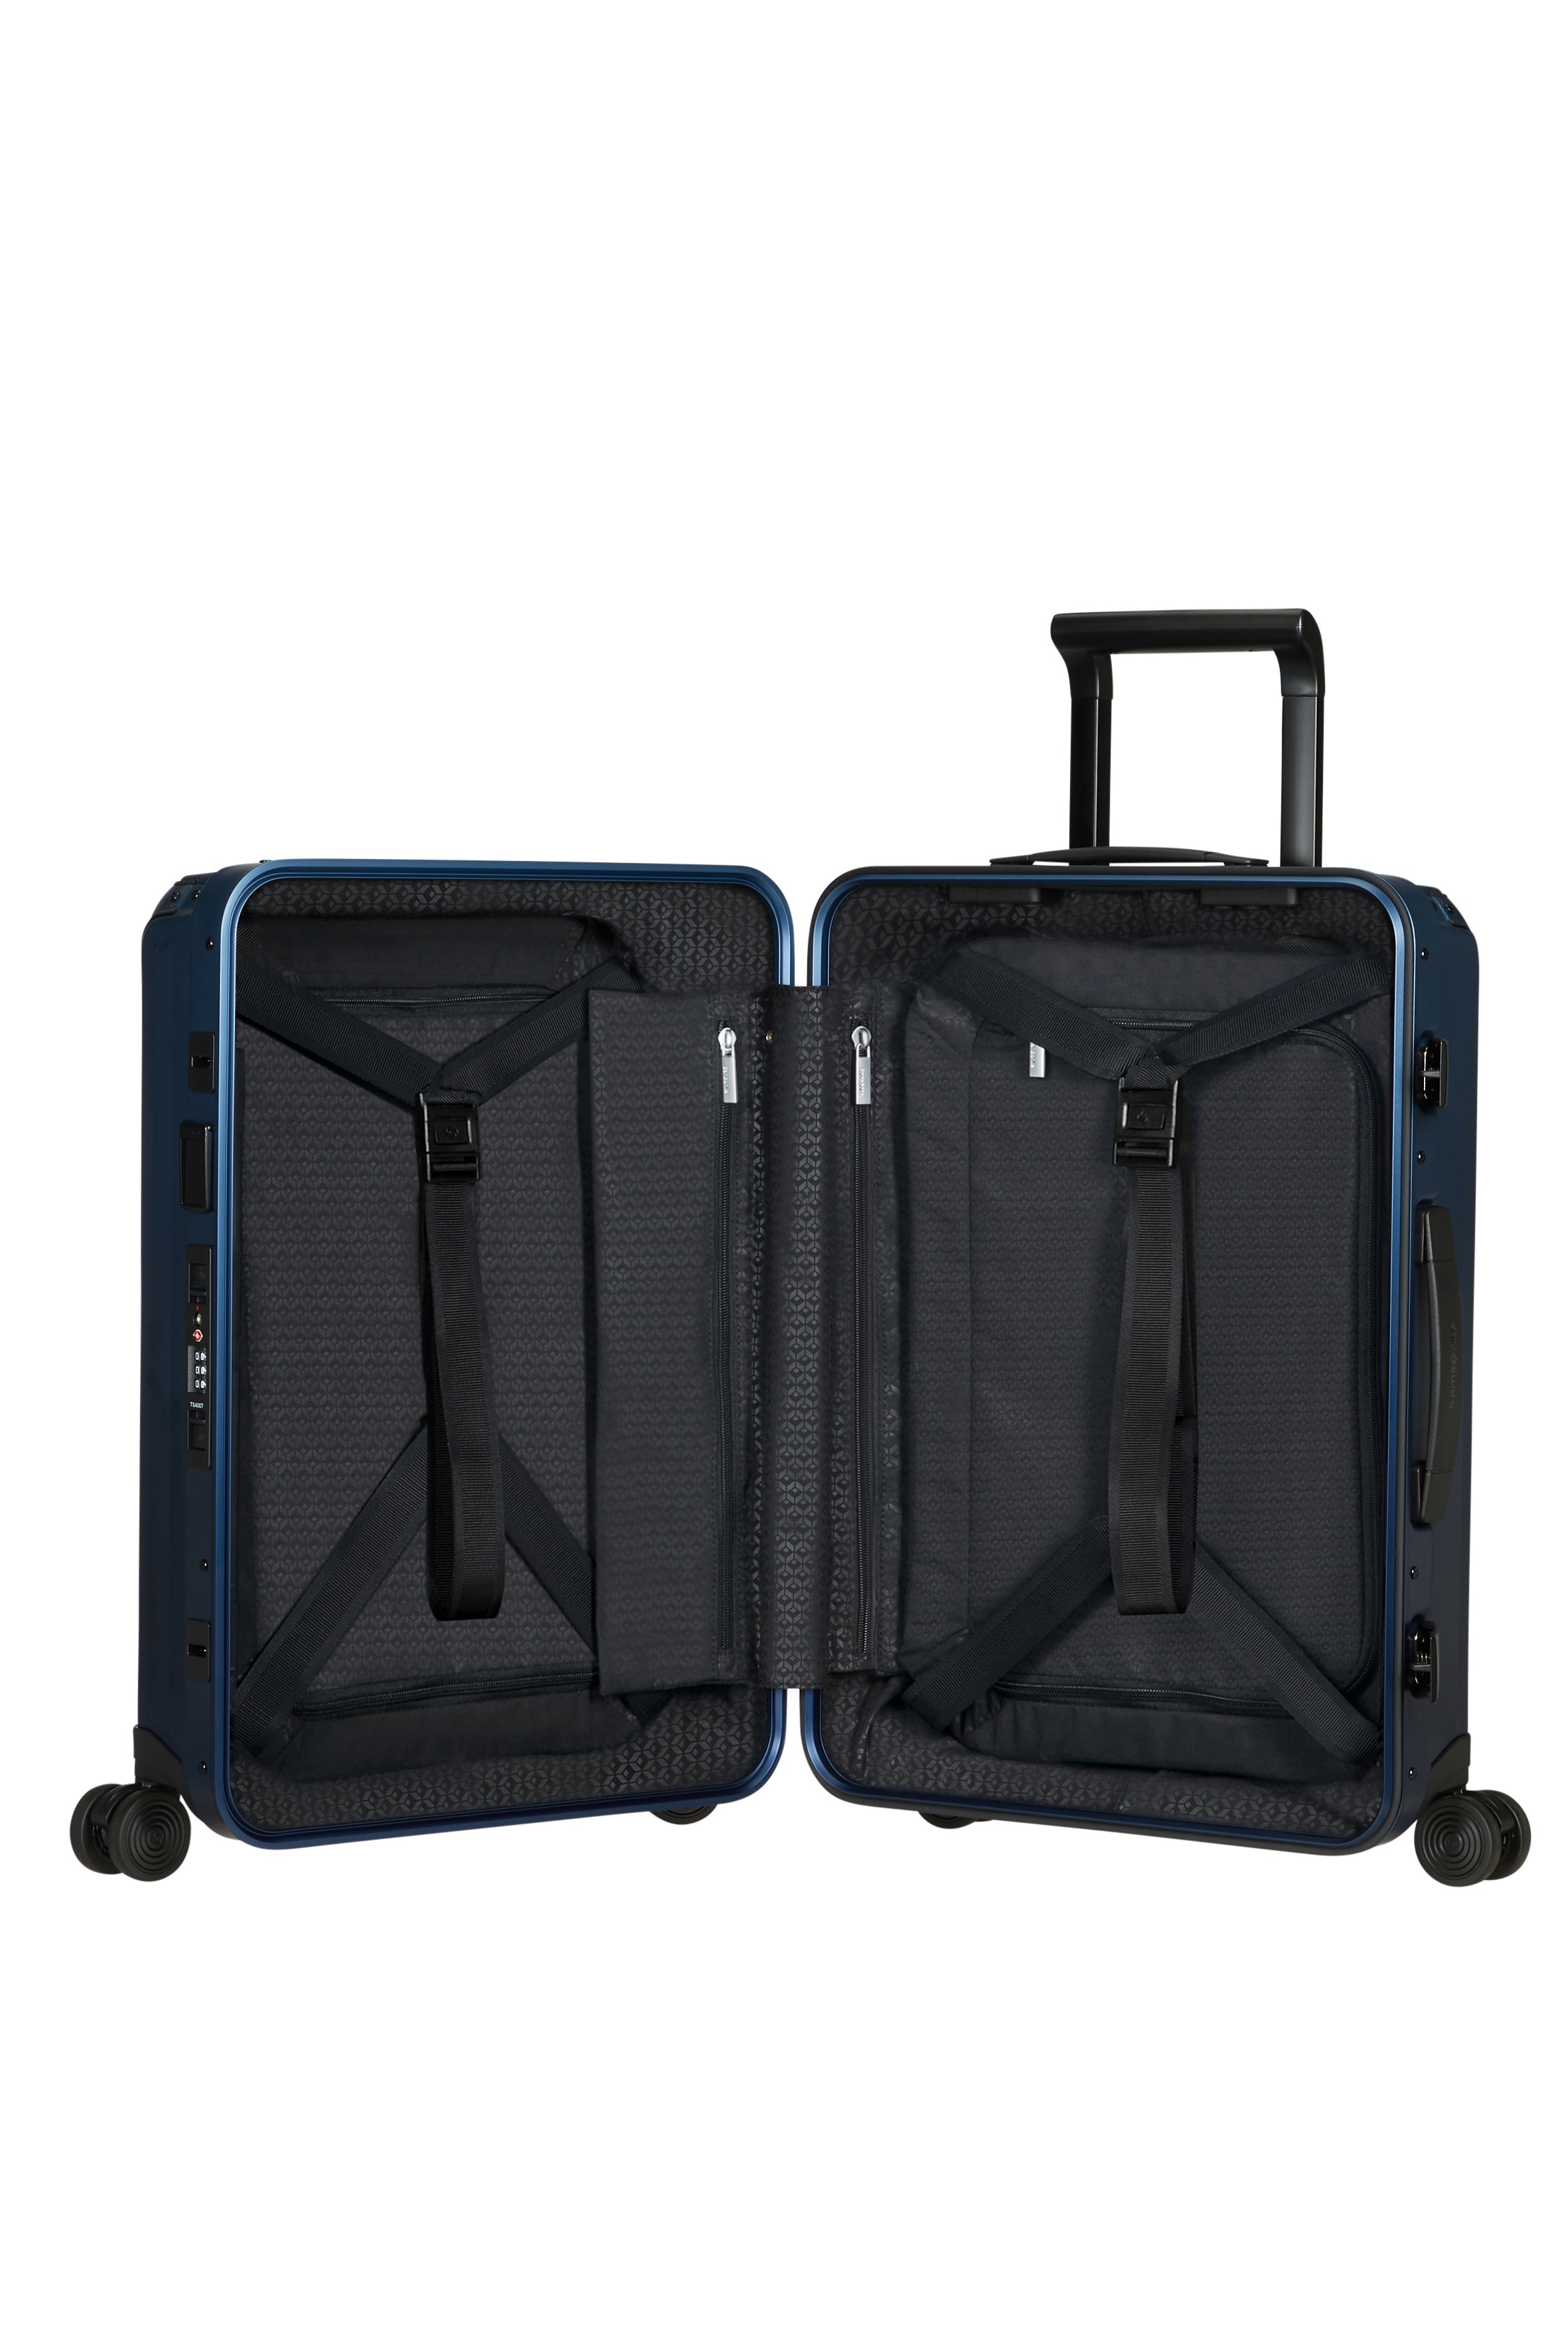 Samsonite - Lite Box ALU 55cm Small 4 Wheel Hard Suitcase - Gradient Midnight-6